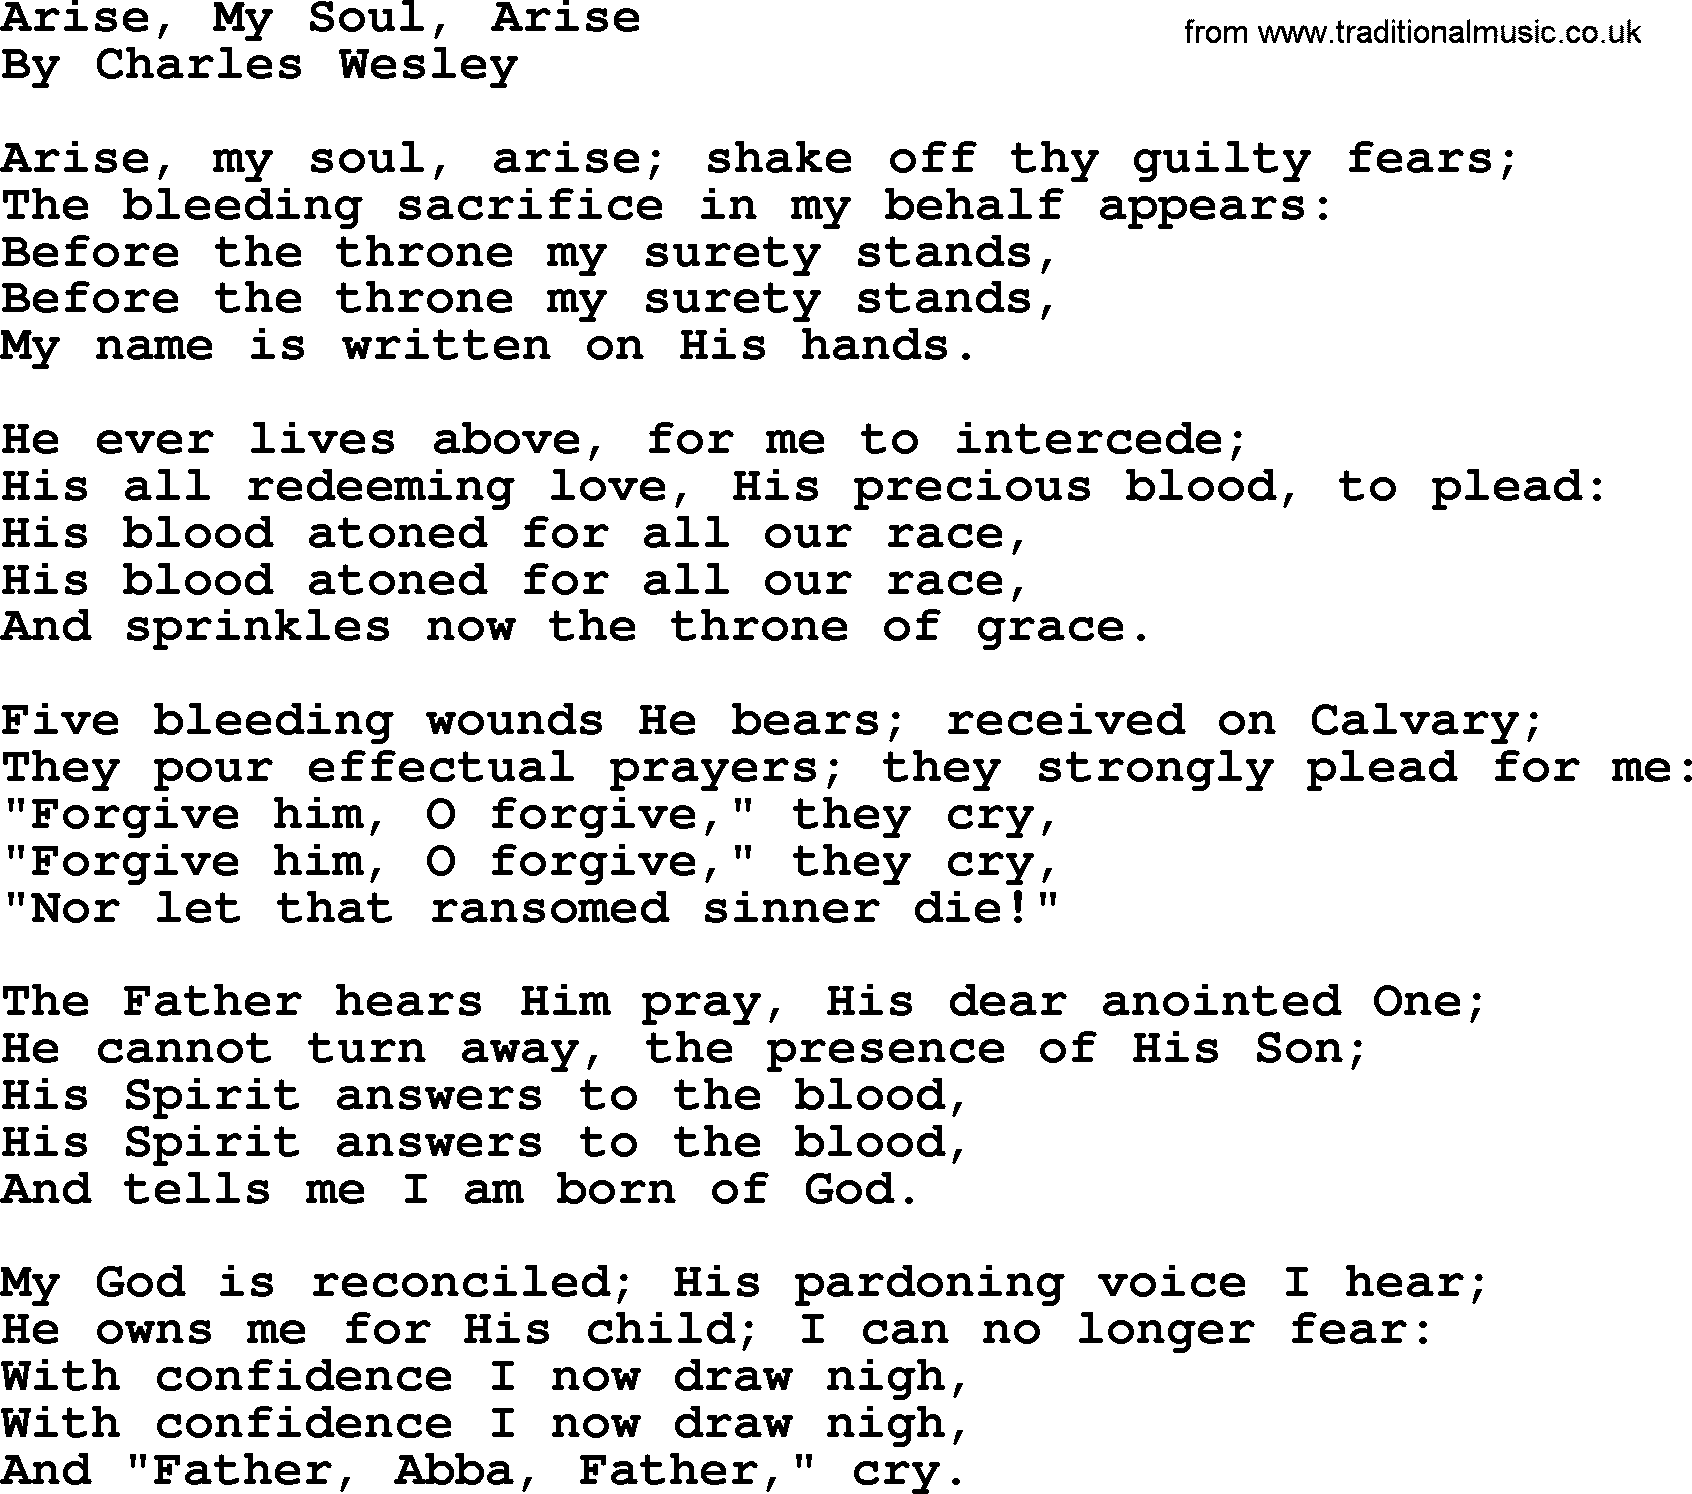 Charles Wesley hymn: Arise, My Soul, Arise, lyrics